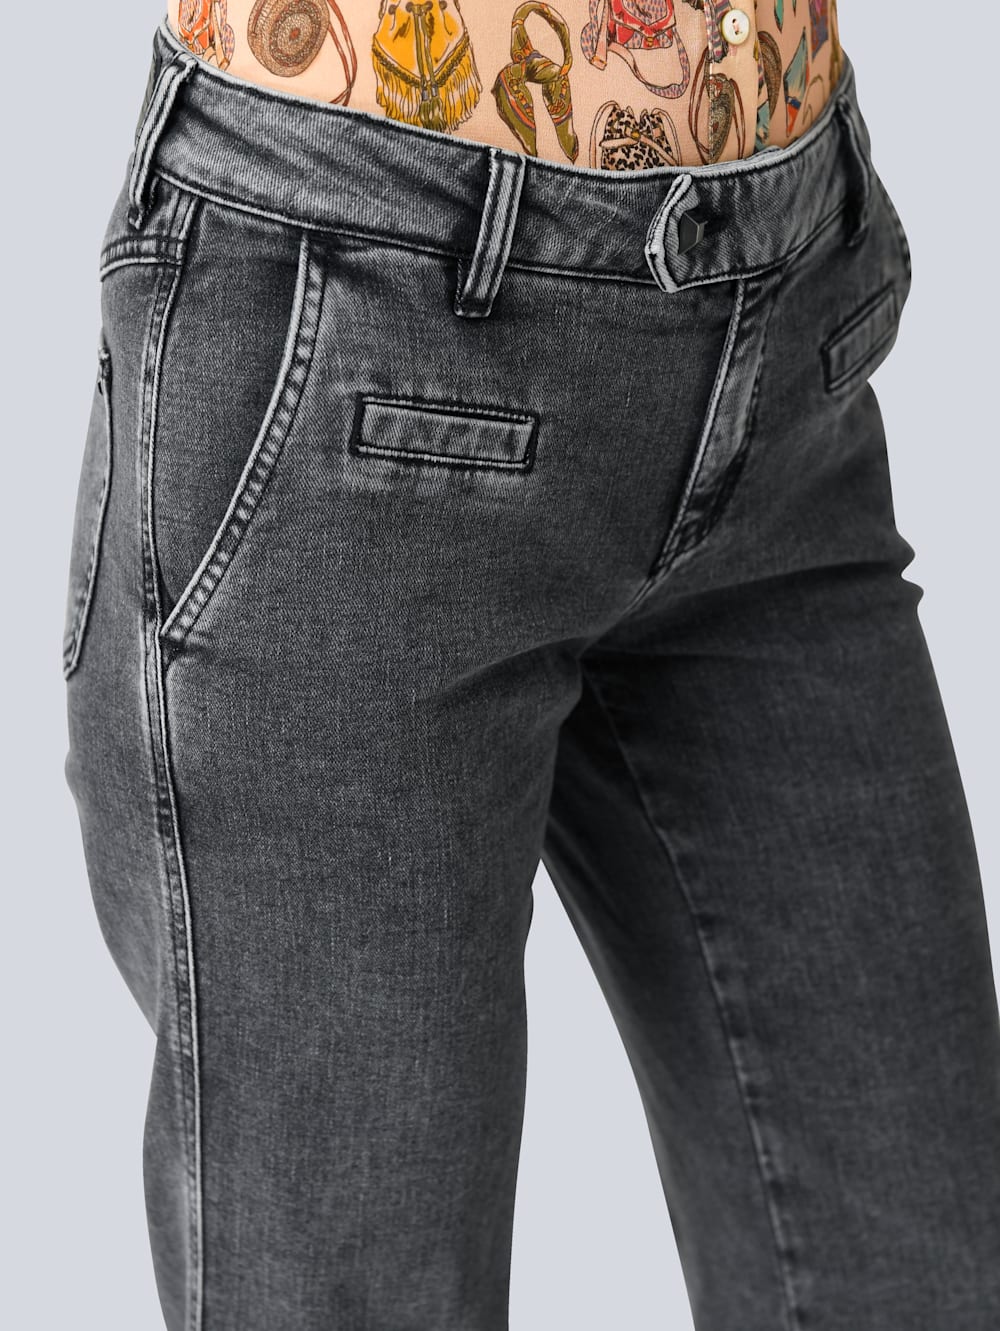 Rosner Jeans in indigo flow Färbung | Alba Moda